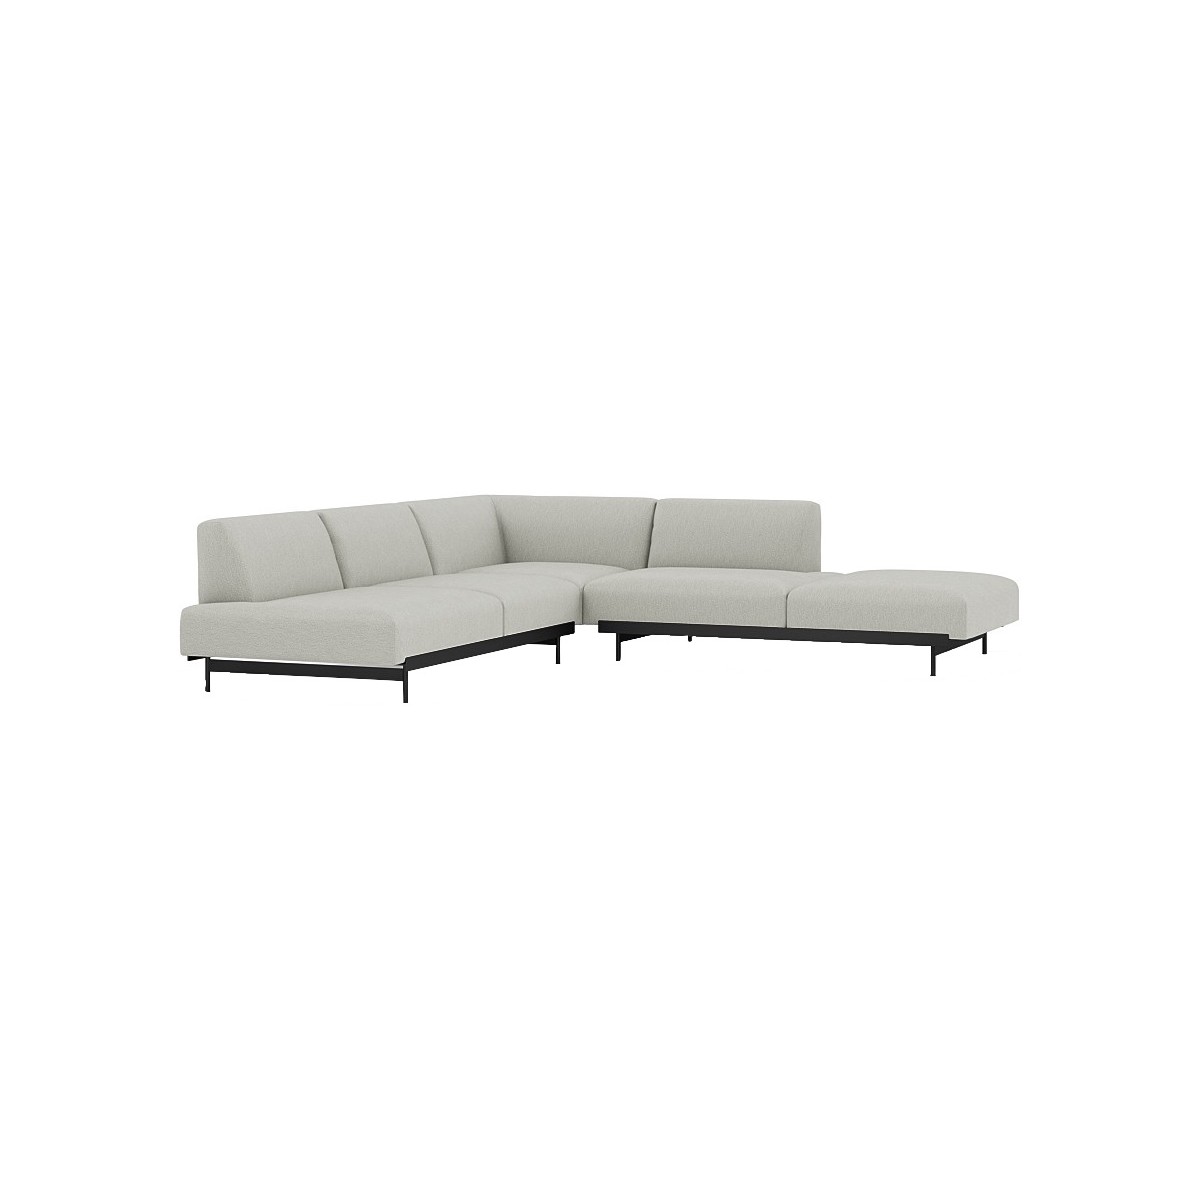 Clay 12 / black – In Situ corner sofa / configuration 4 – 287 x 287 cm